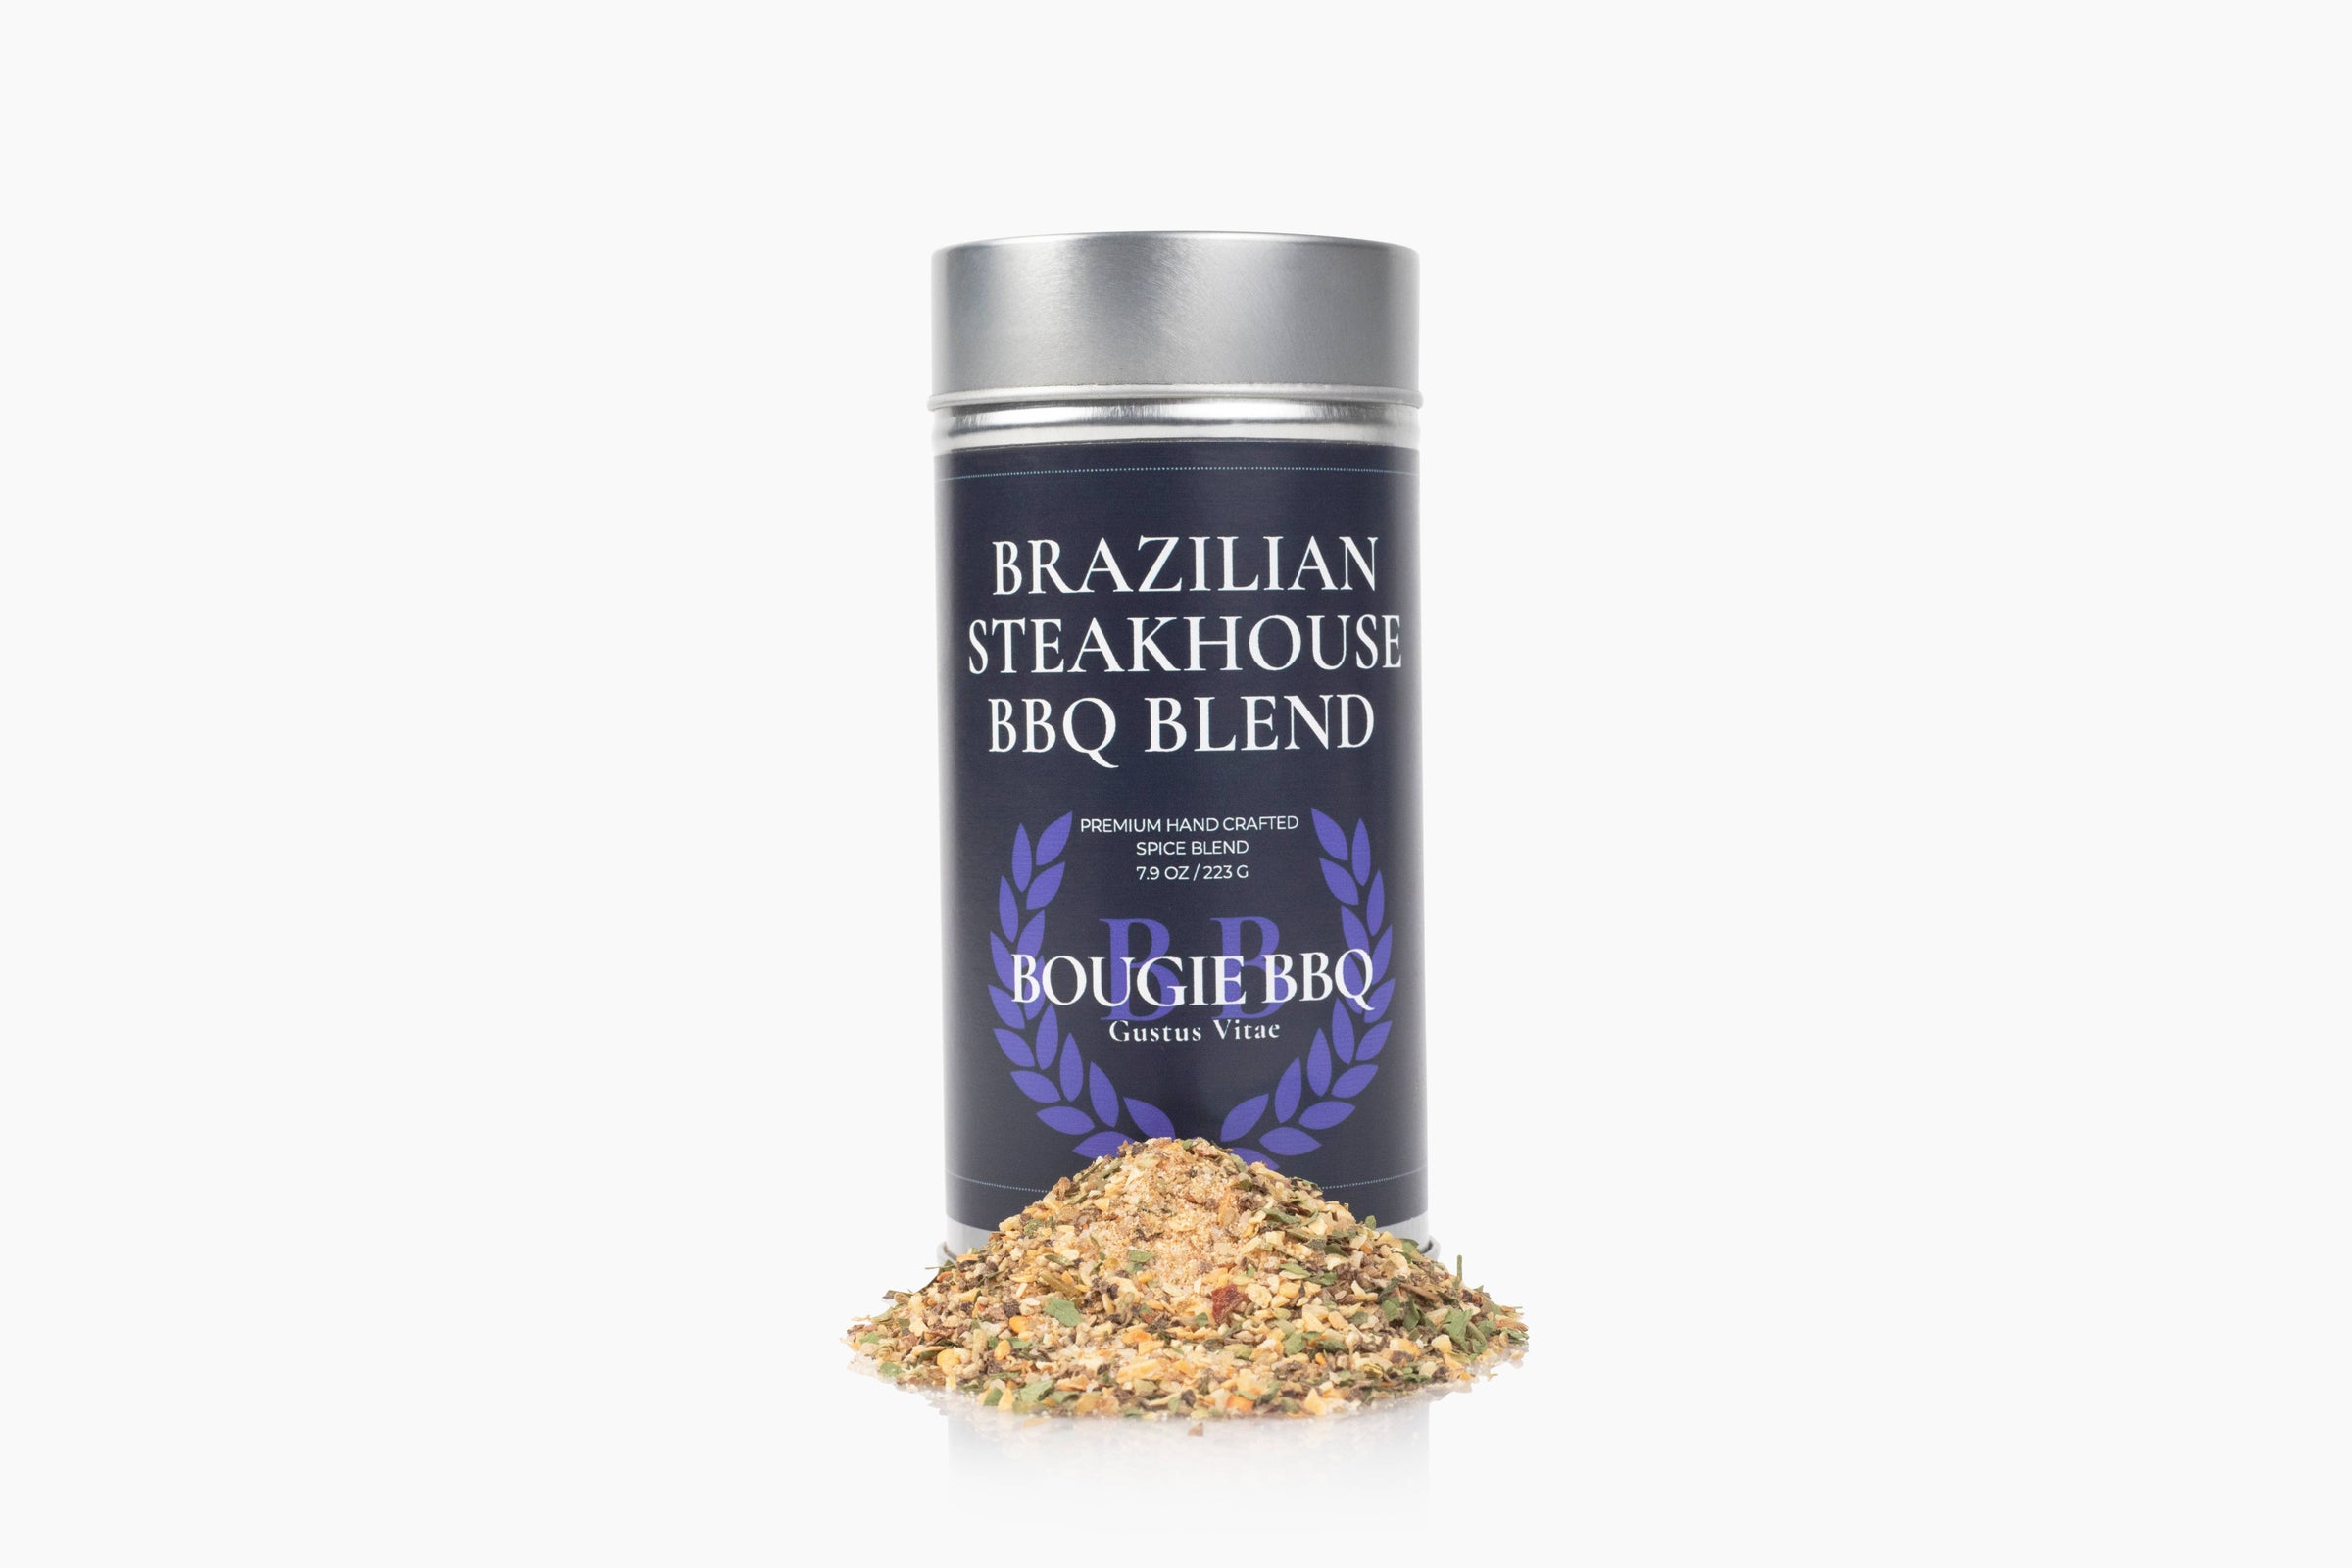 Brazilian Steakhouse BBQ Blend, Bougie BBQ 7.9 oz (224g) net wt.